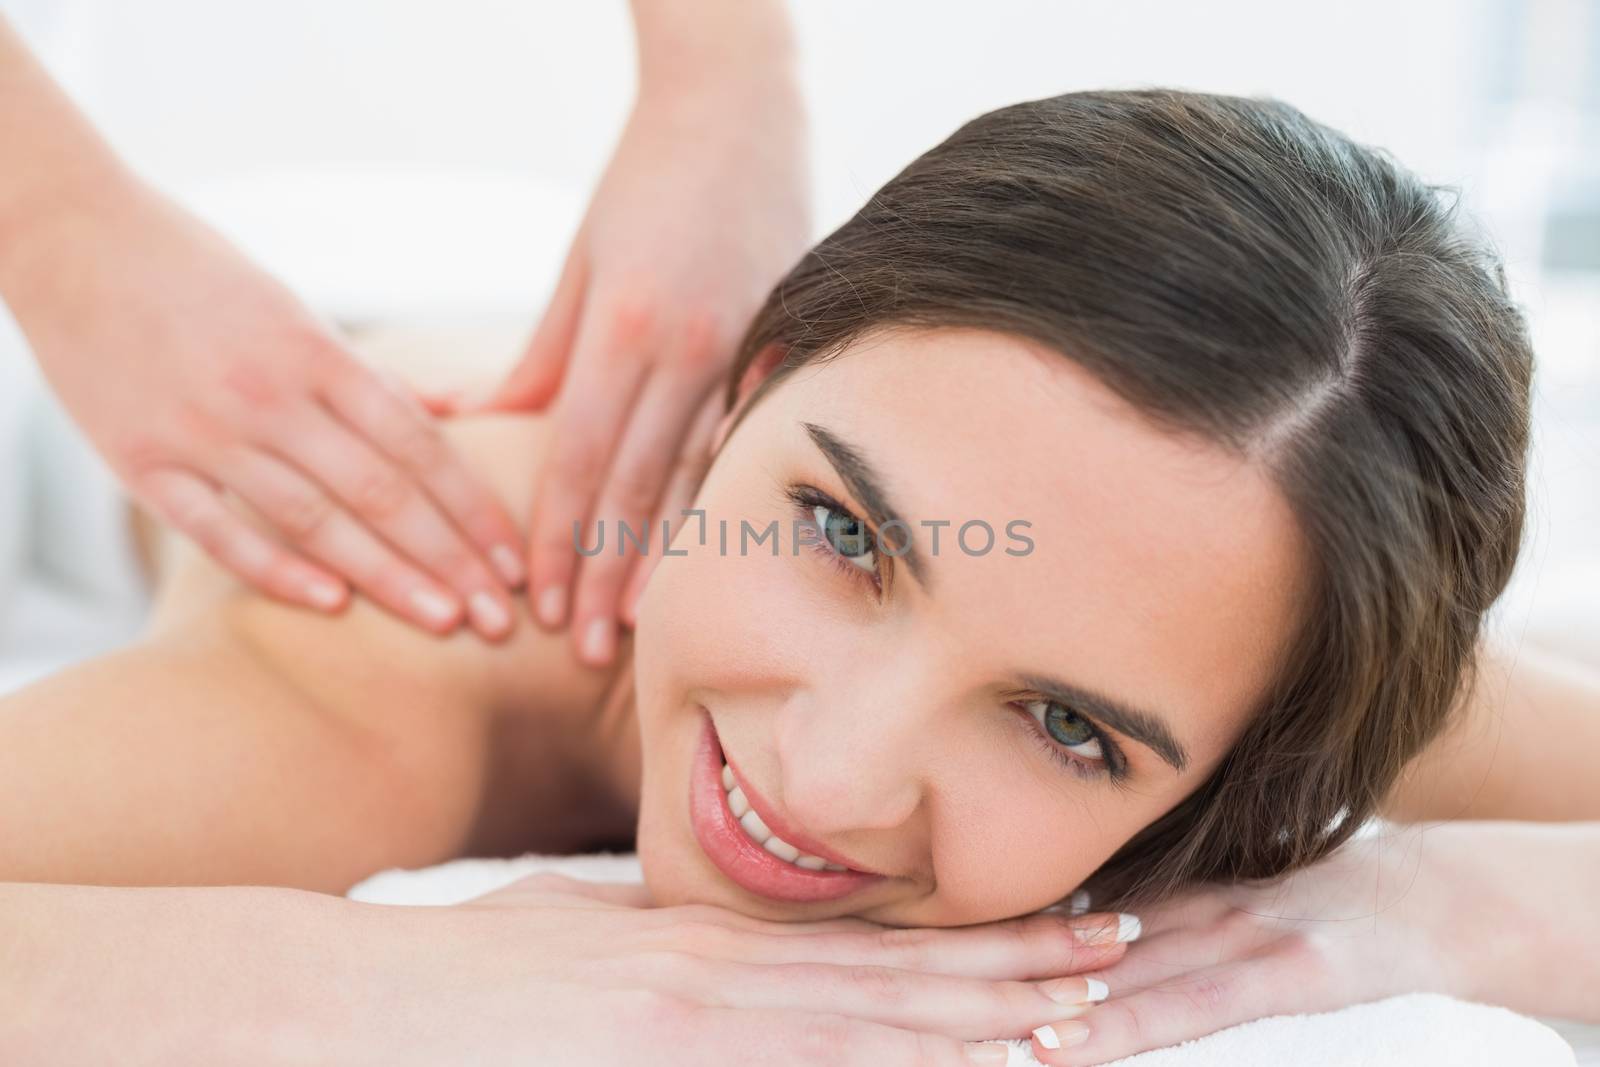 Smiling woman enjoying shoulder massage at beauty spa by Wavebreakmedia